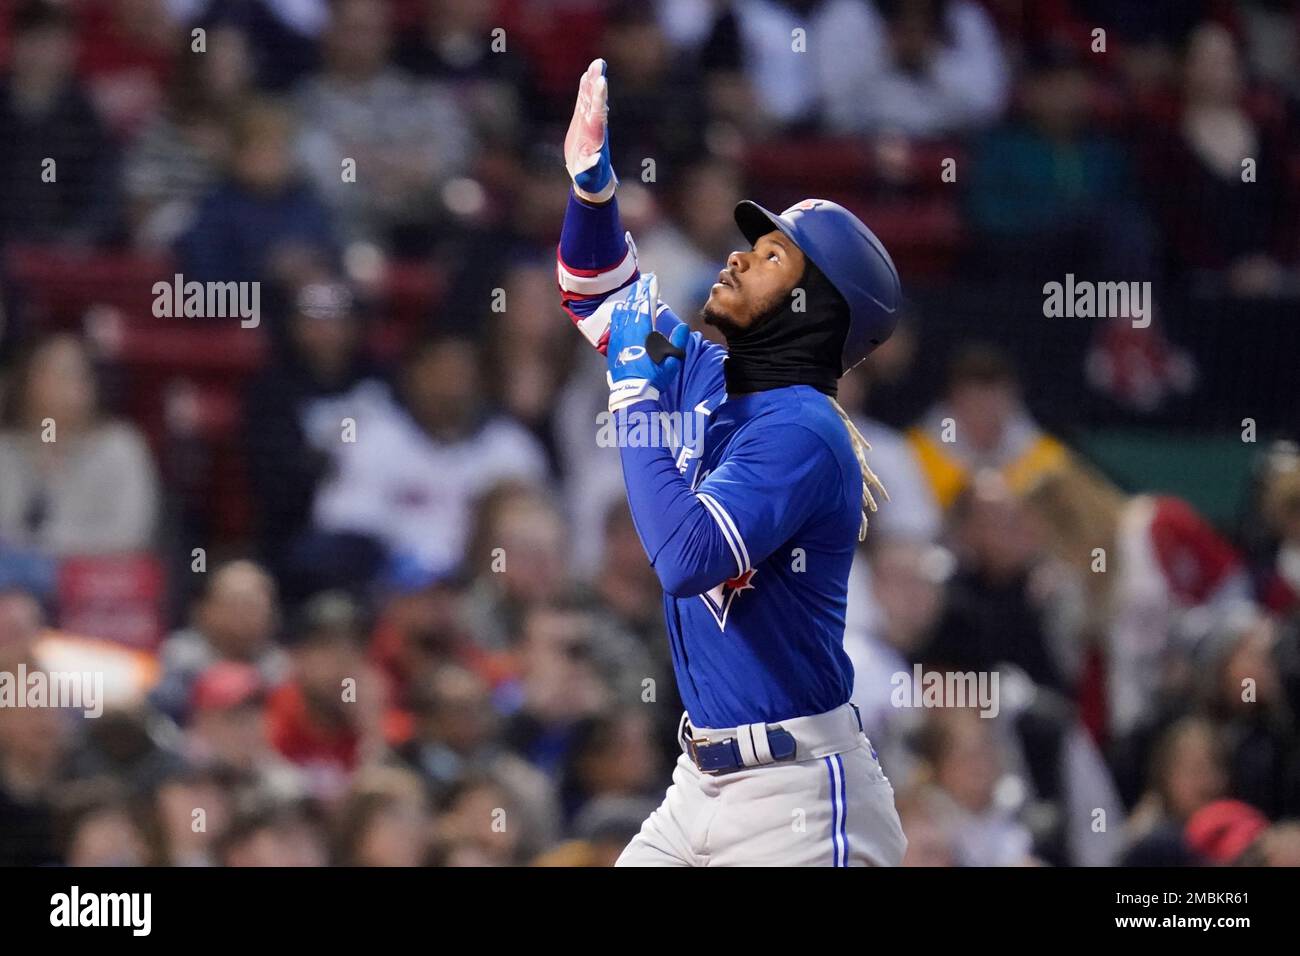 Toronto Blue Jays left fielder Raimel Tapia during a baseball game